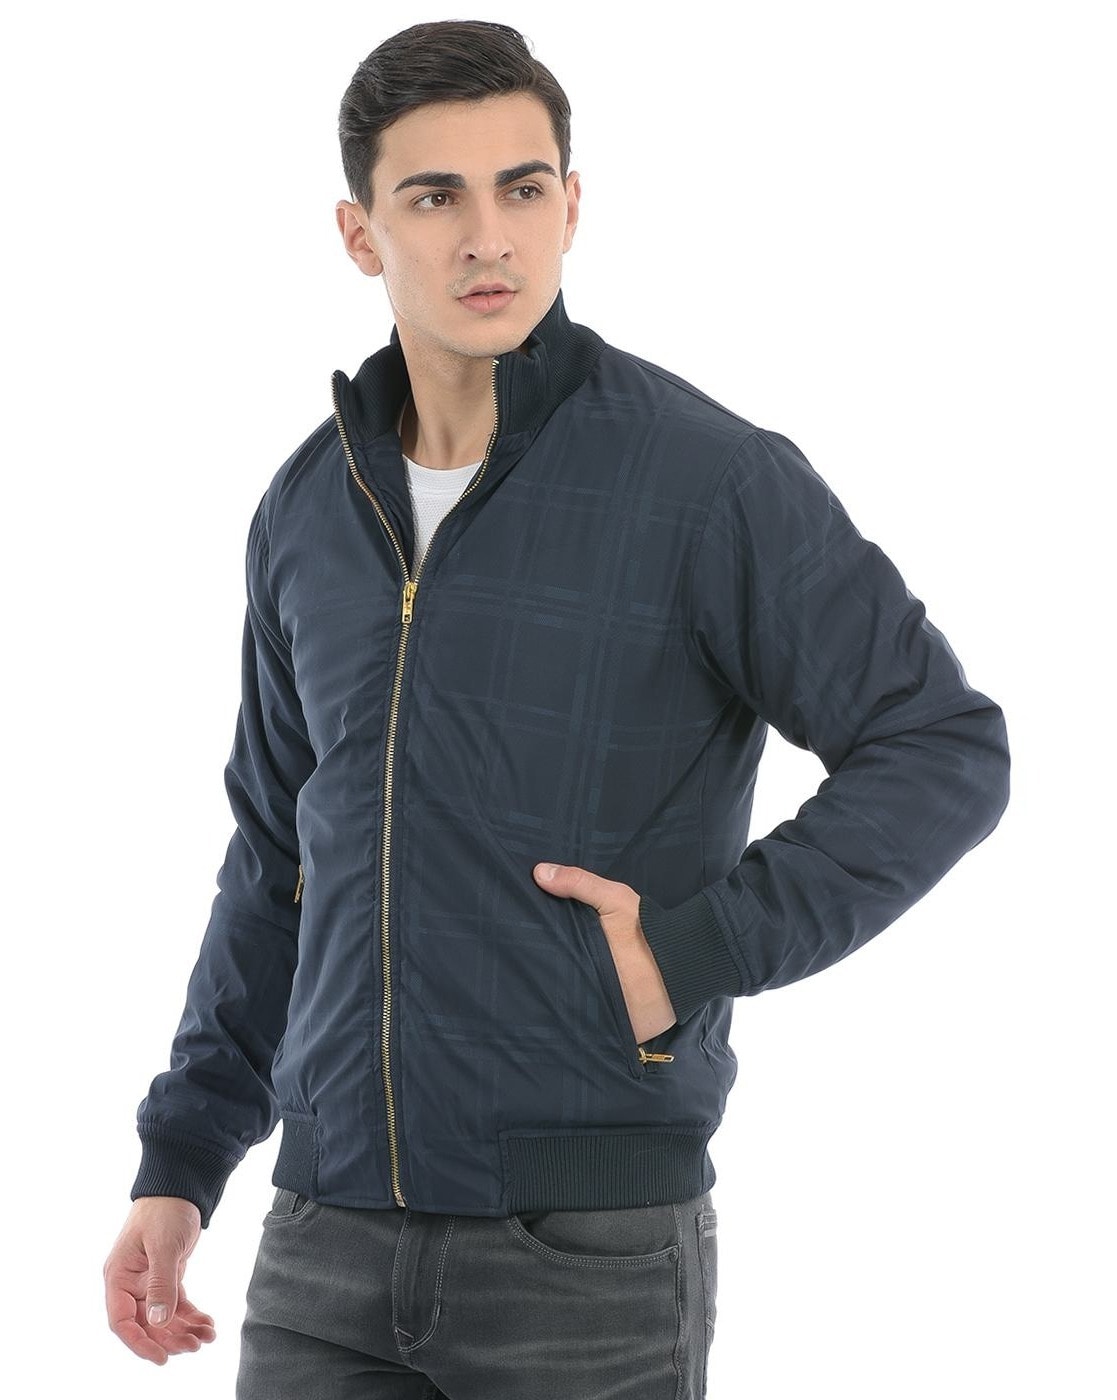 Northville Windproof, Water resistant, Fleece Lined Winter Jacket, Kid size  10 | eBay